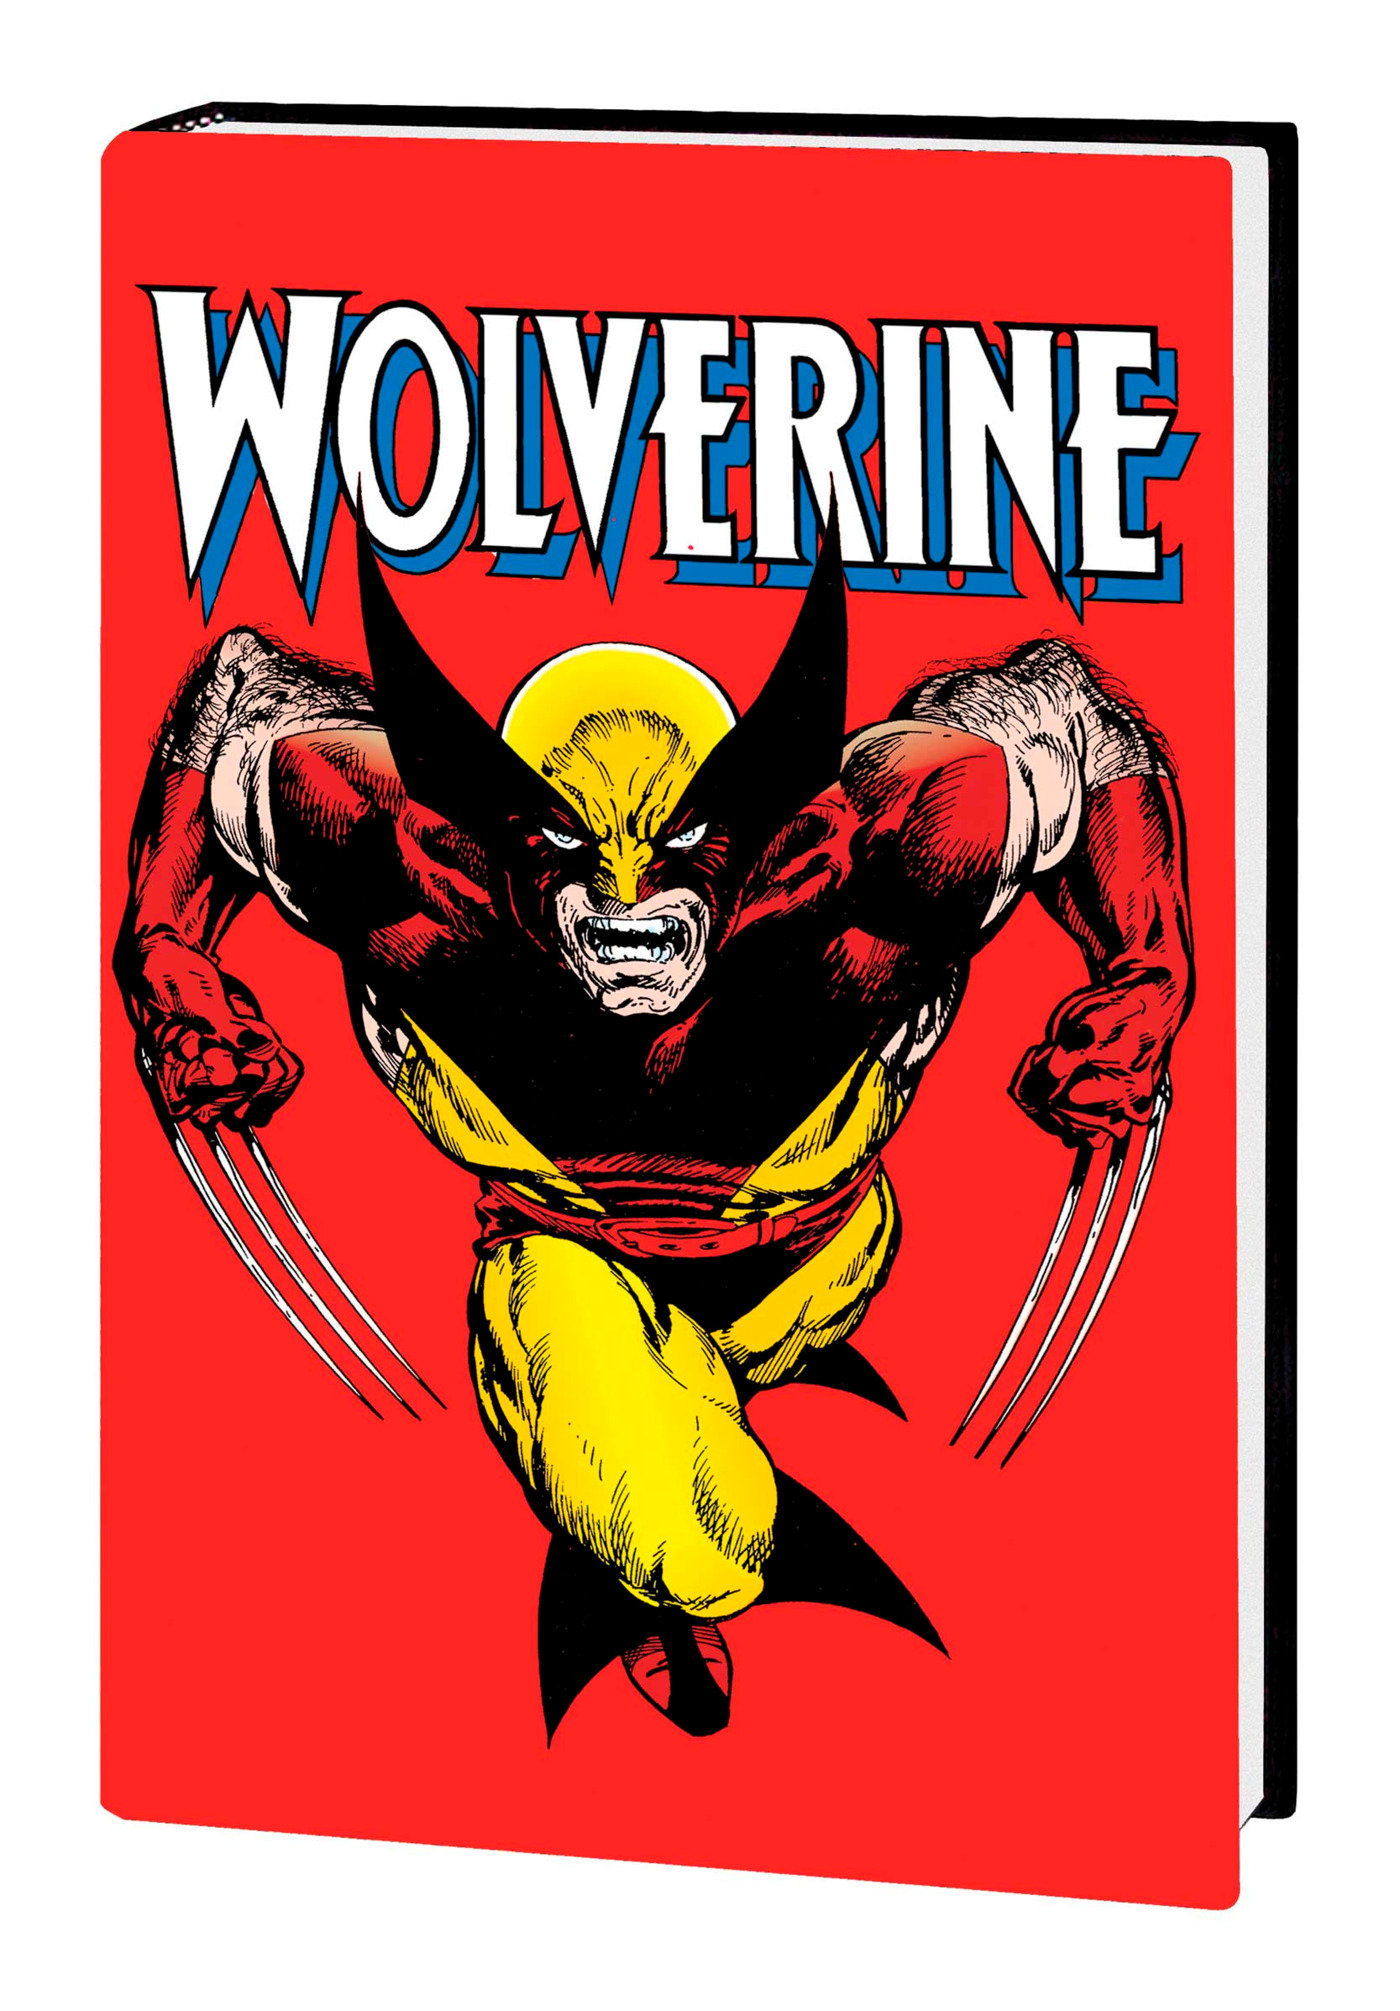 Wolverine Omnibus Hardcover Volume 2 Byrne Direct Market Variant New Printing